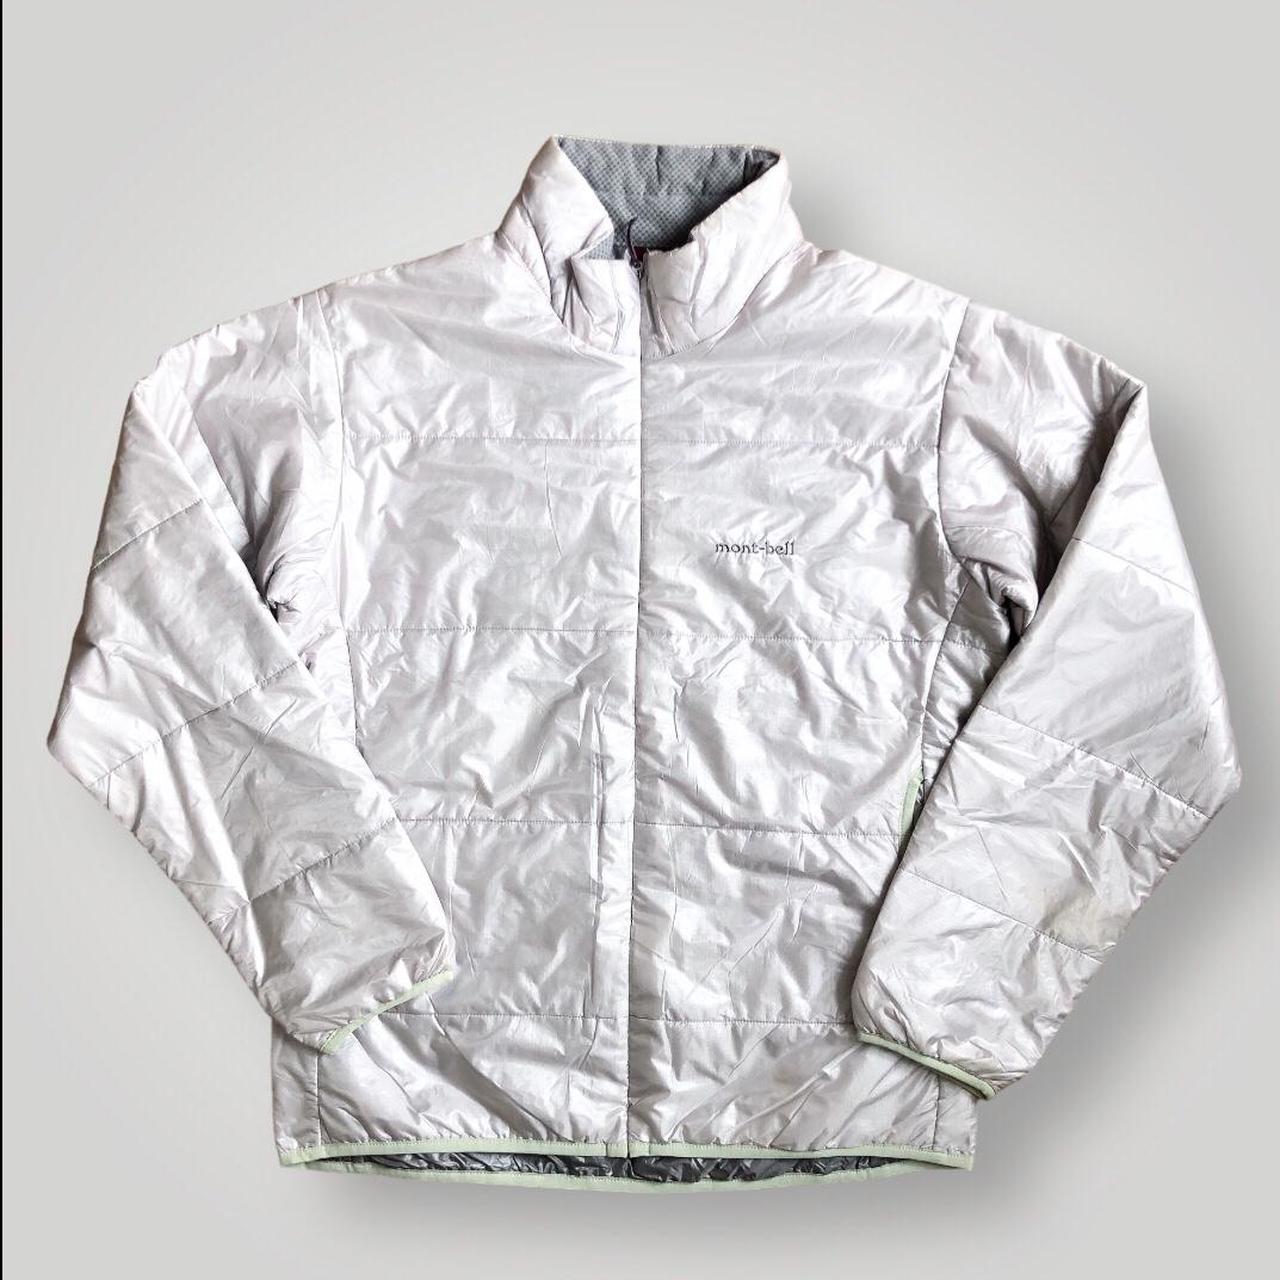 Montbell puffer jacket in silver white. Women’s... - Depop